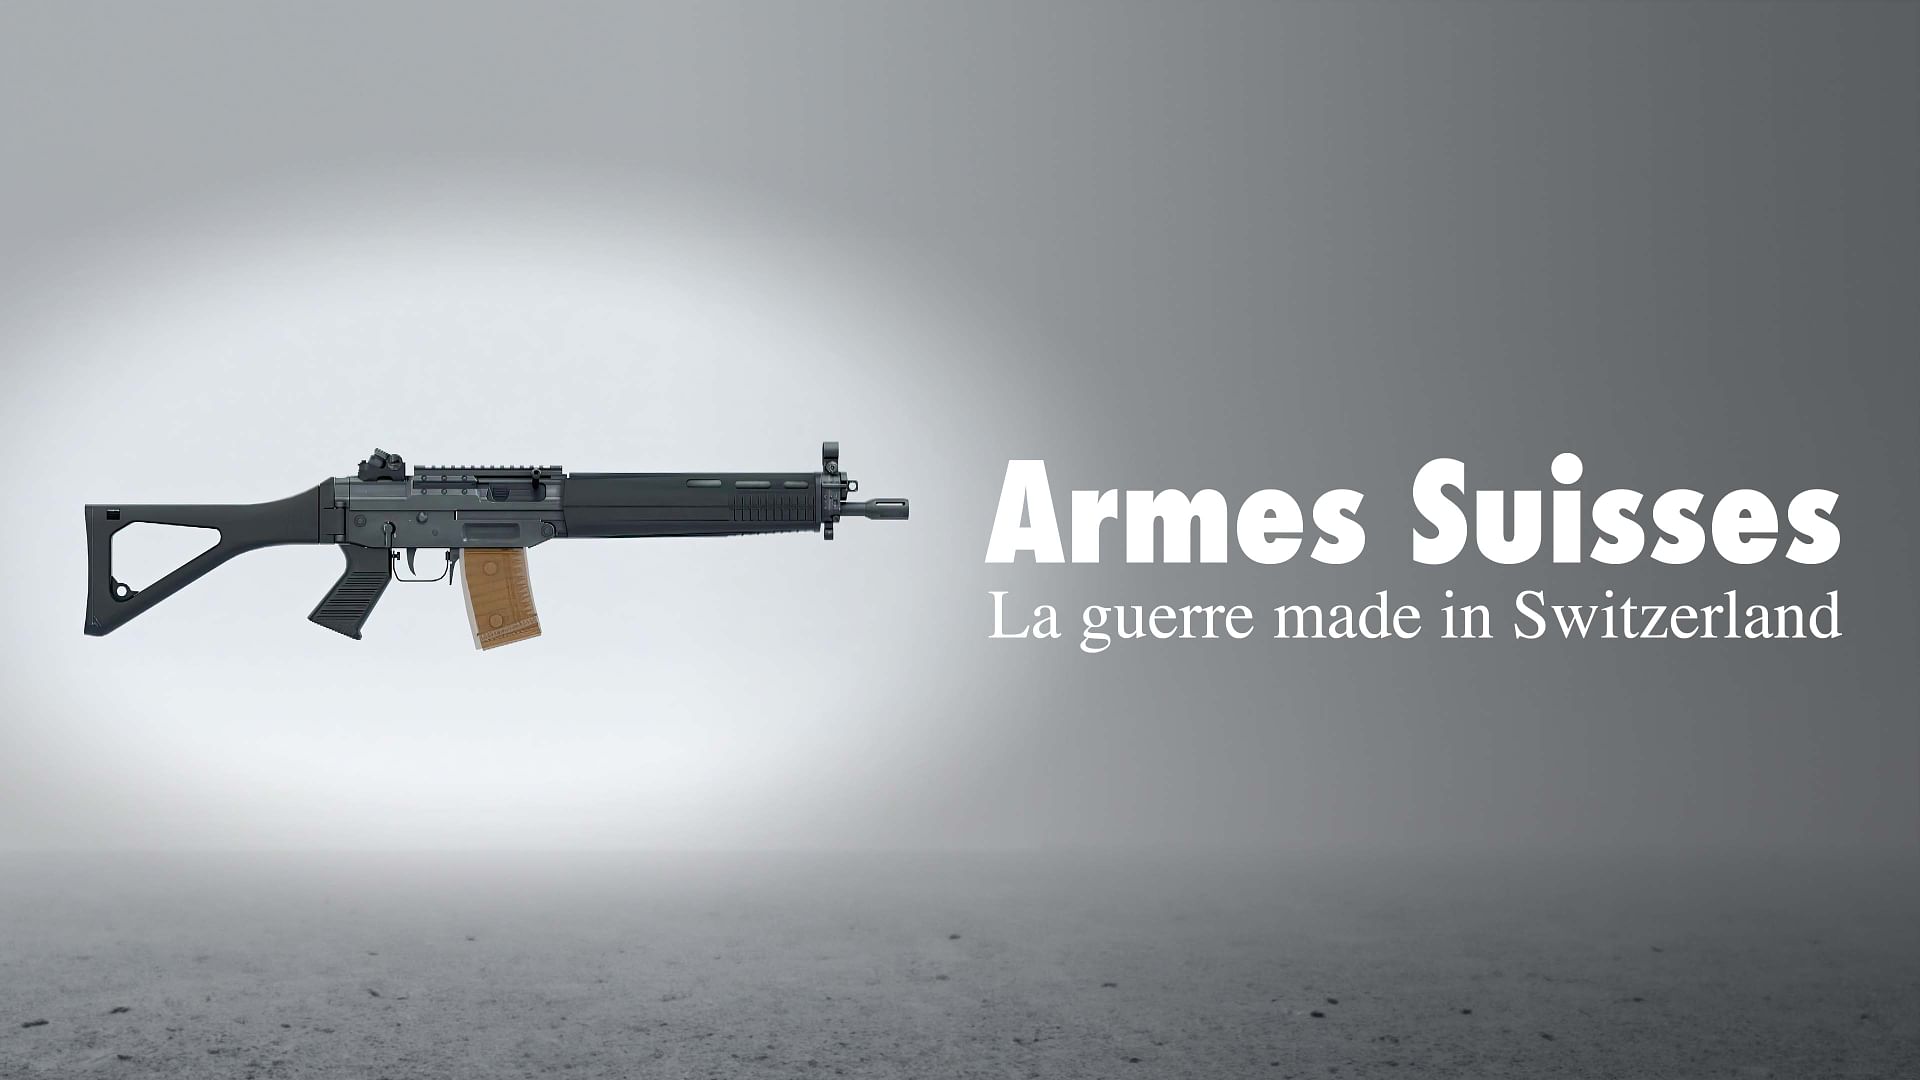 Armes suisses - la guerre made in Switzerland